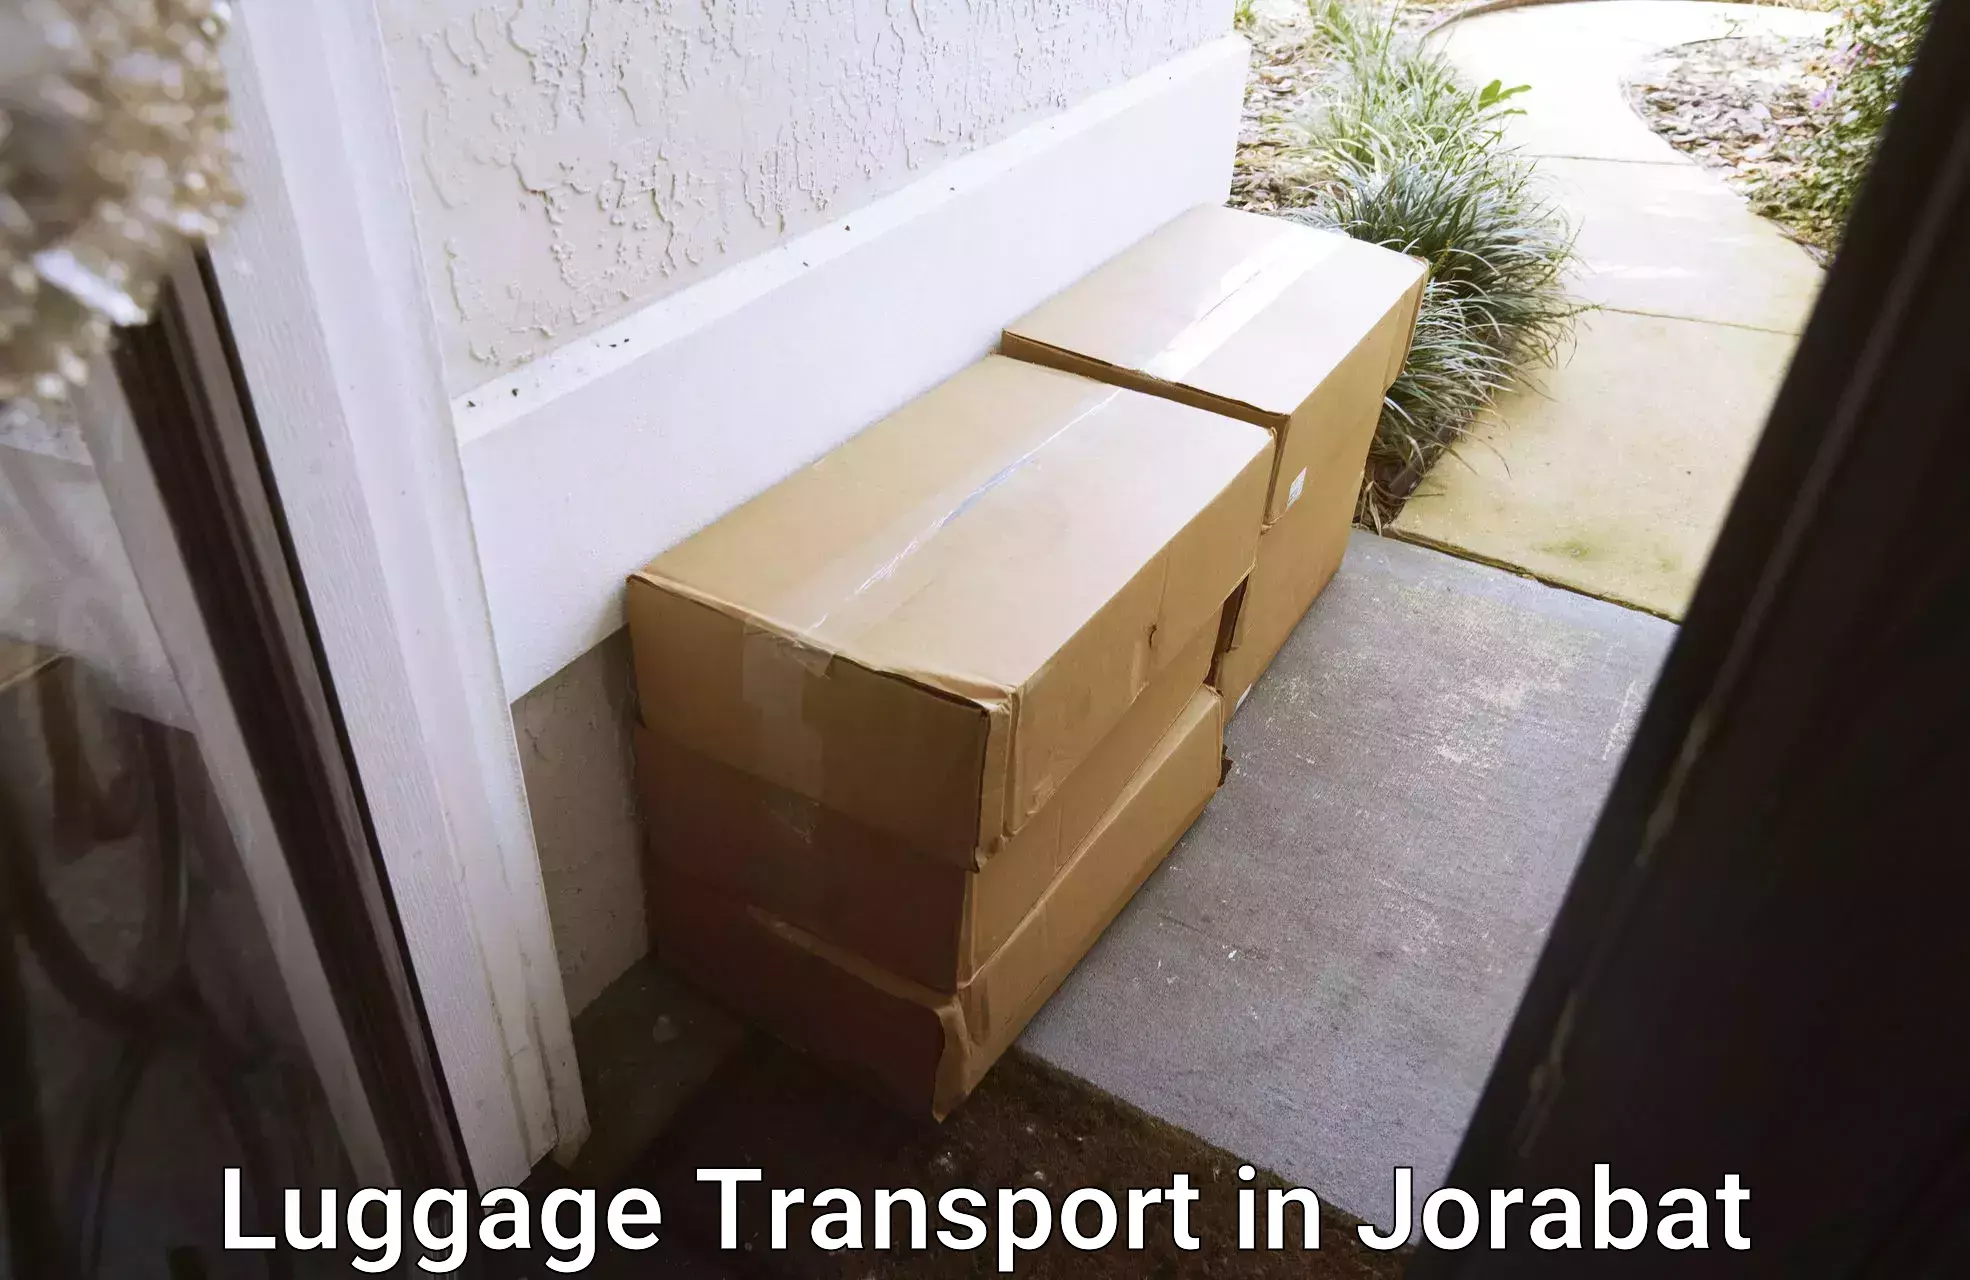 Luggage delivery estimate in Jorabat